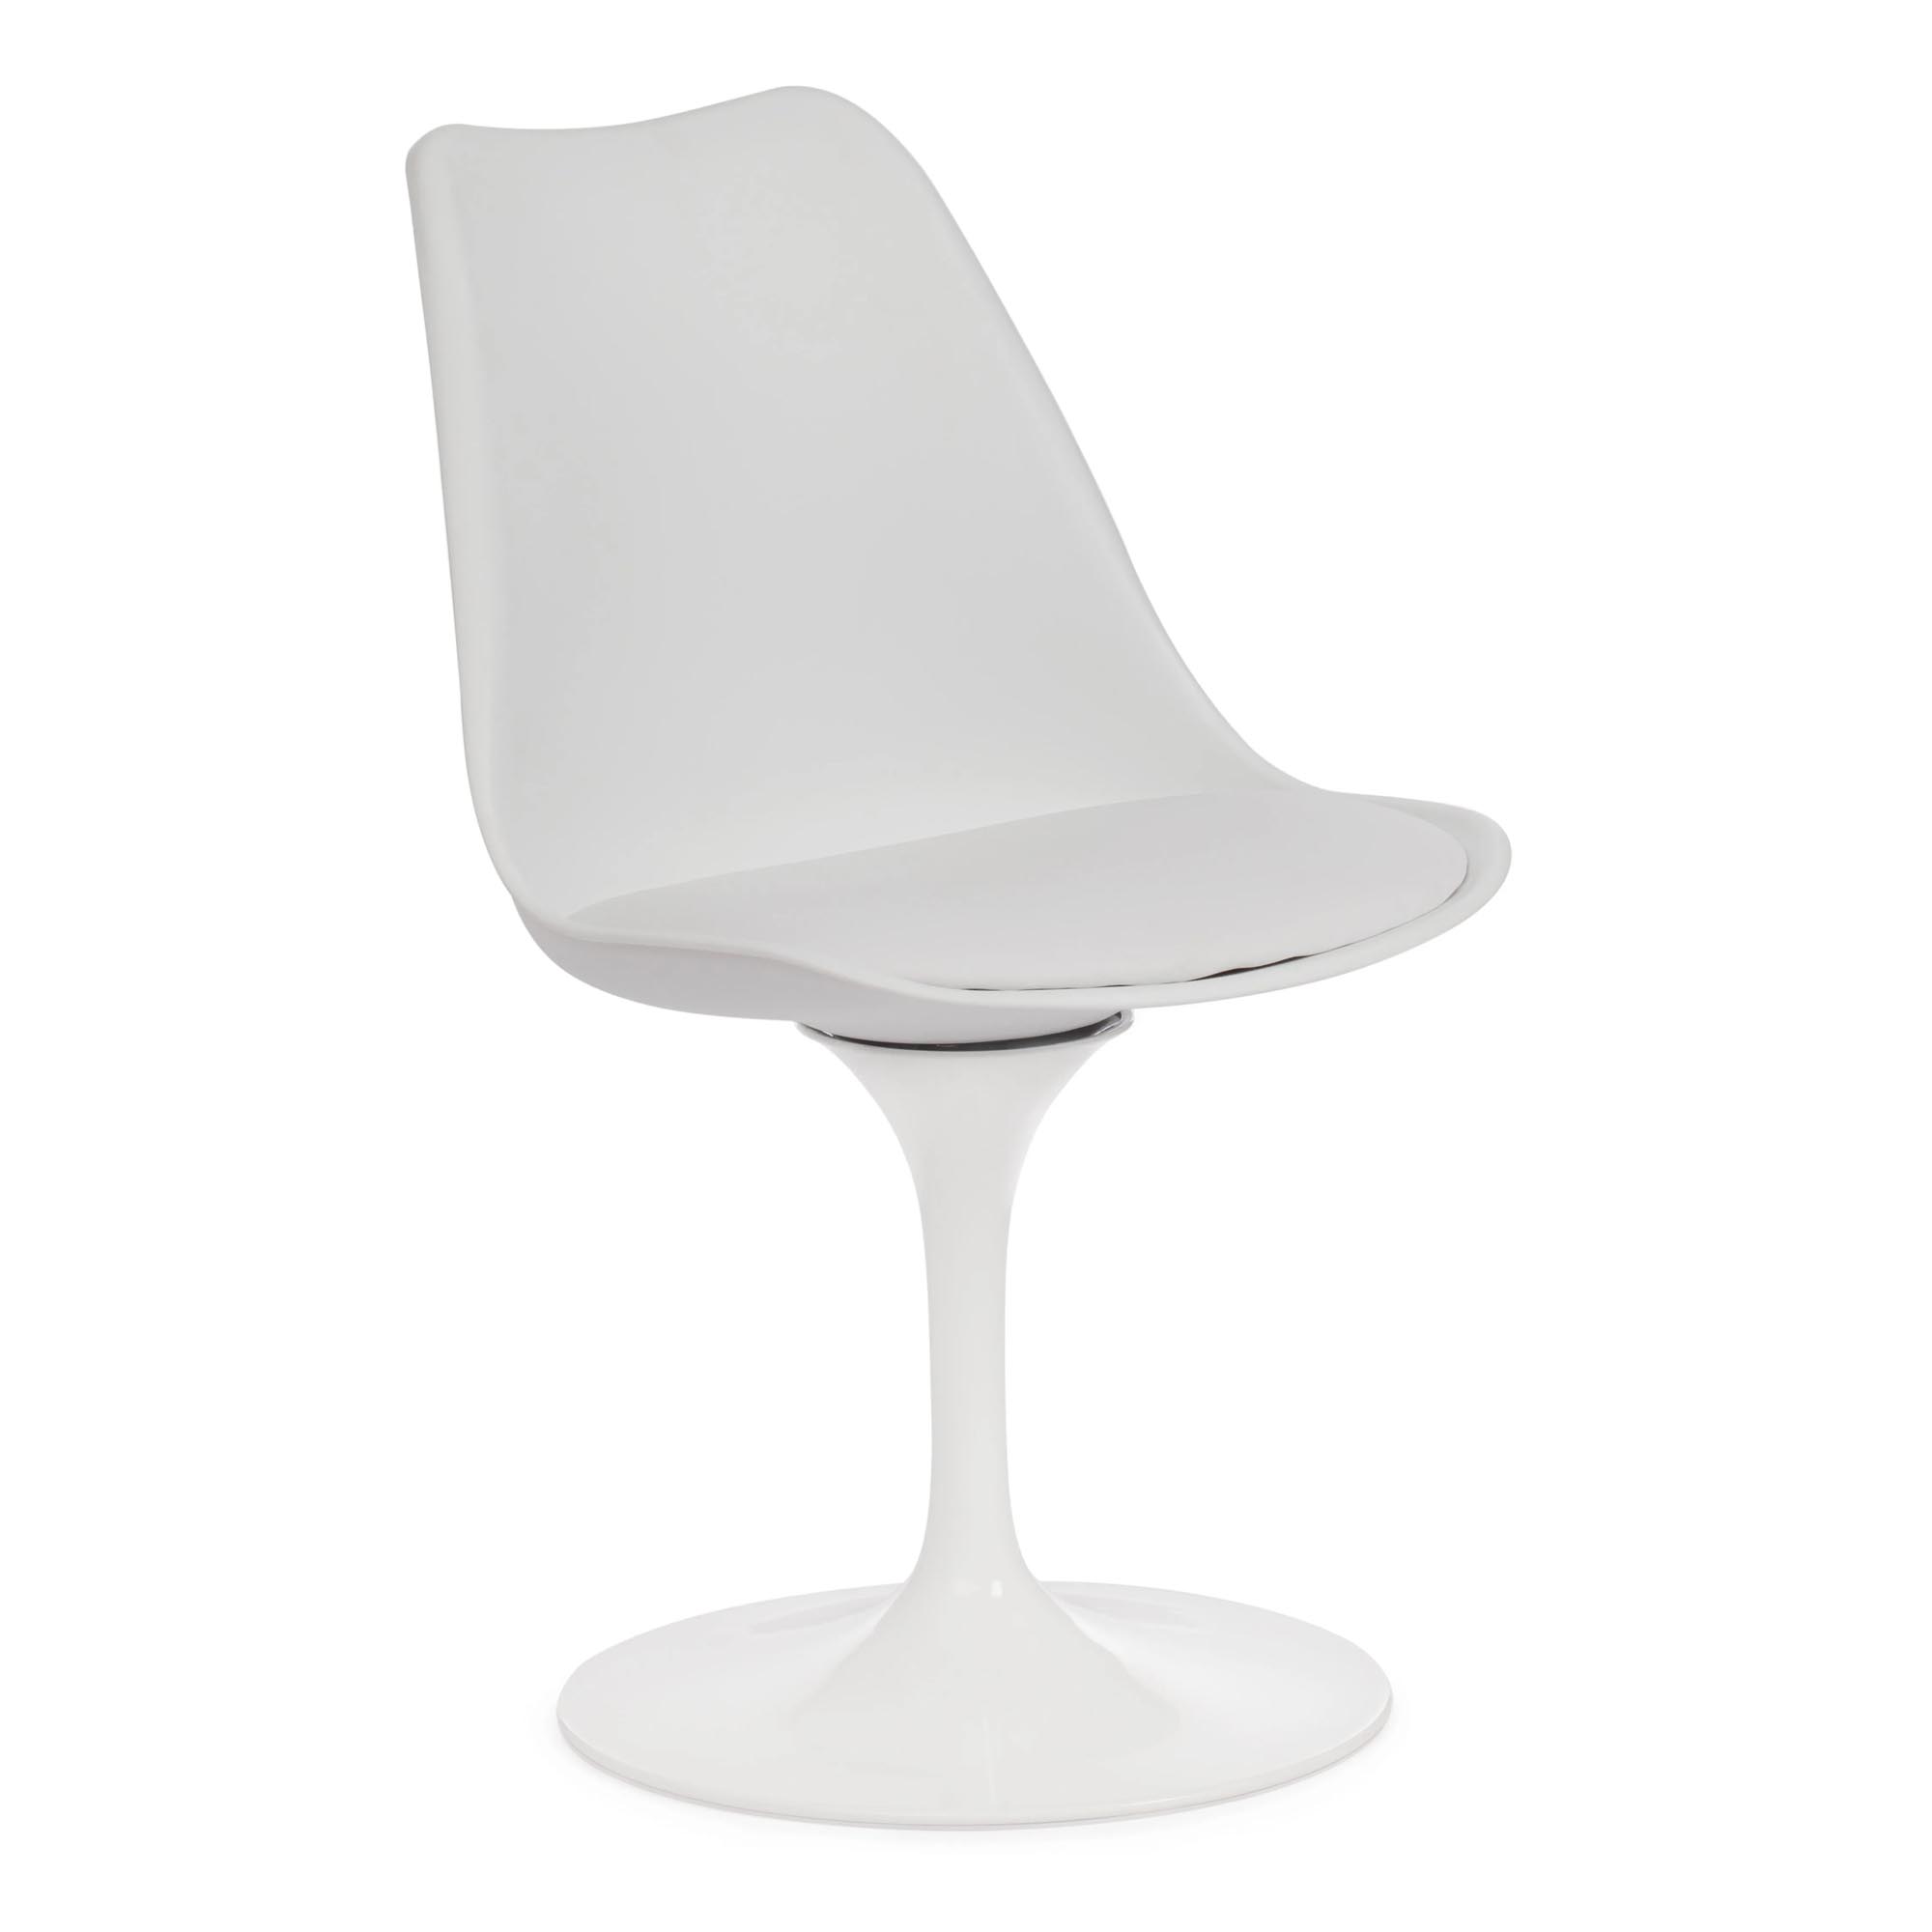 Стул TC Tulip fashion chair 55x48x81 см белый стул cat chair mod 028 чёрный пластик